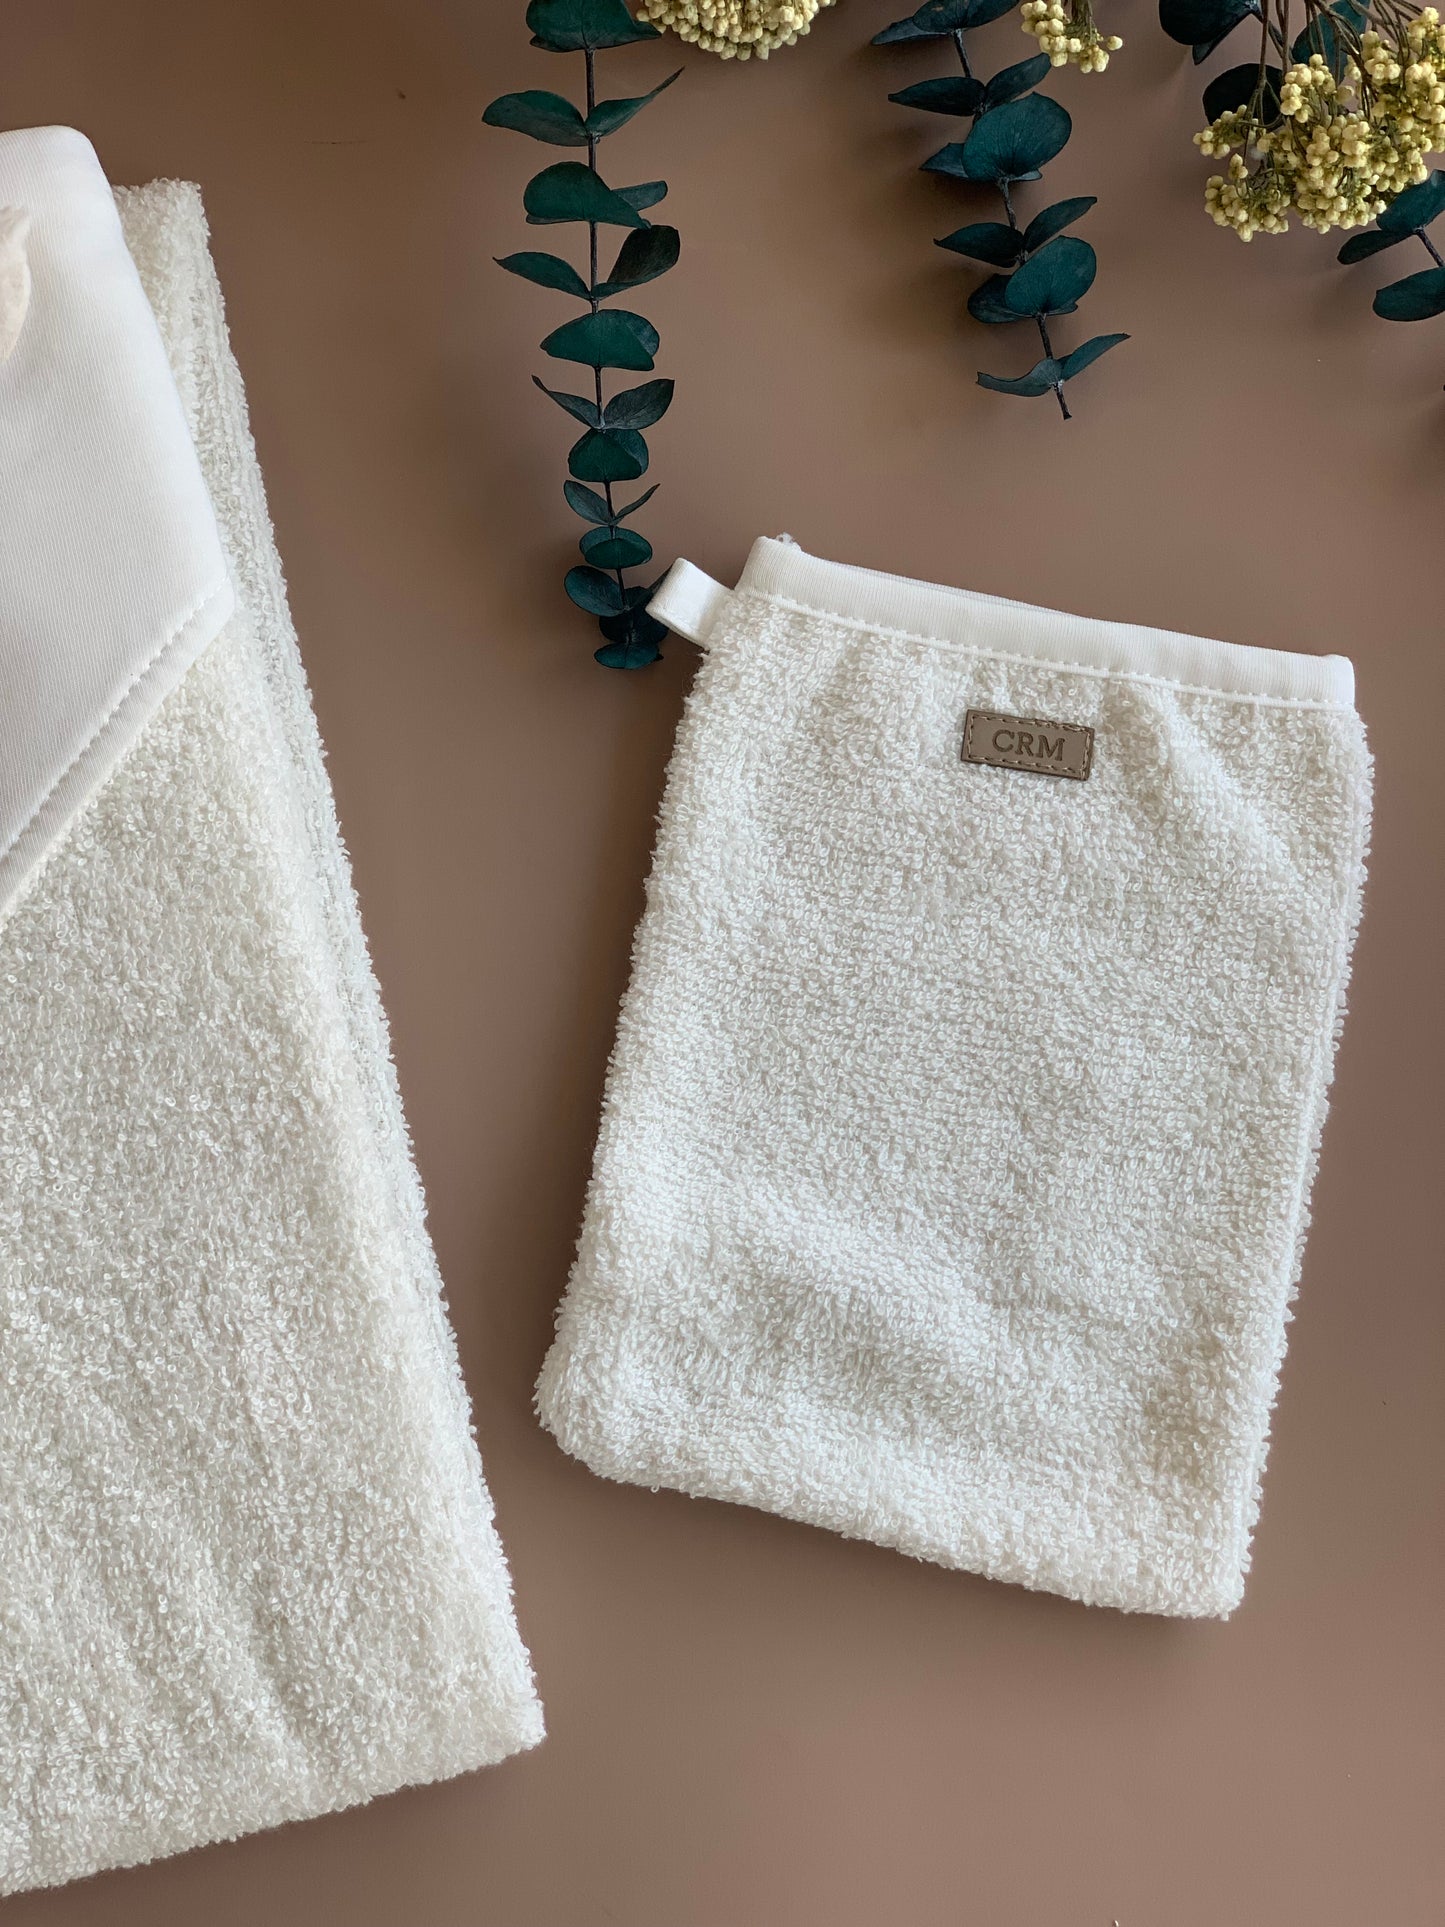 Sheep Bath Towel With Glove-White